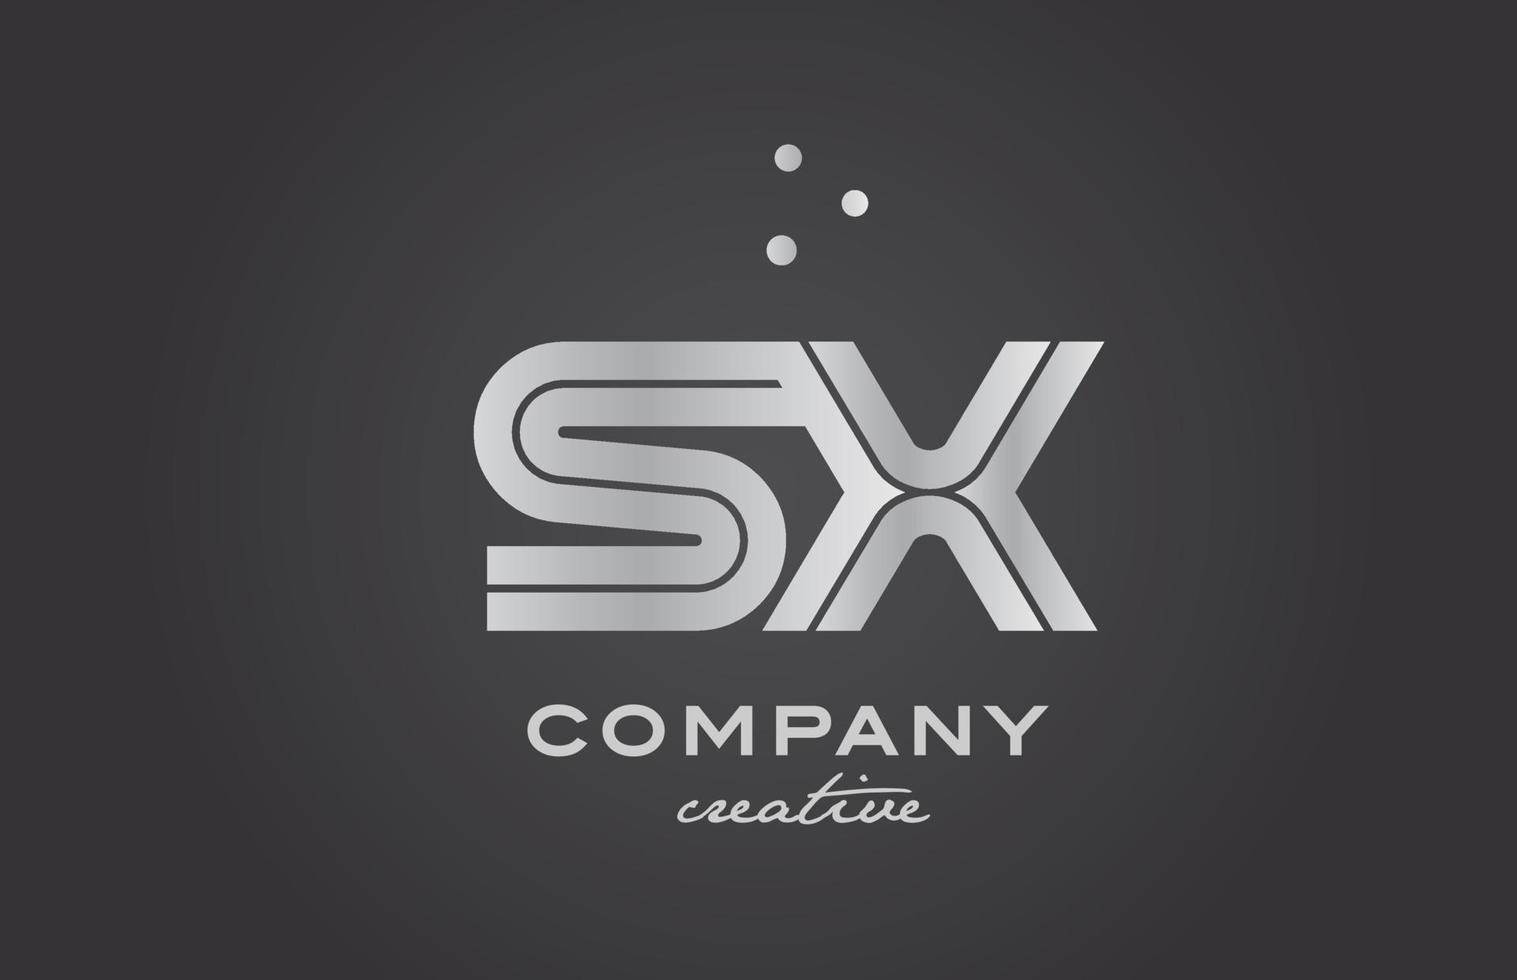 oro dorado sx combinación alfabeto negrita letra logo con puntos unido creativo modelo diseño para empresa y negocio vector